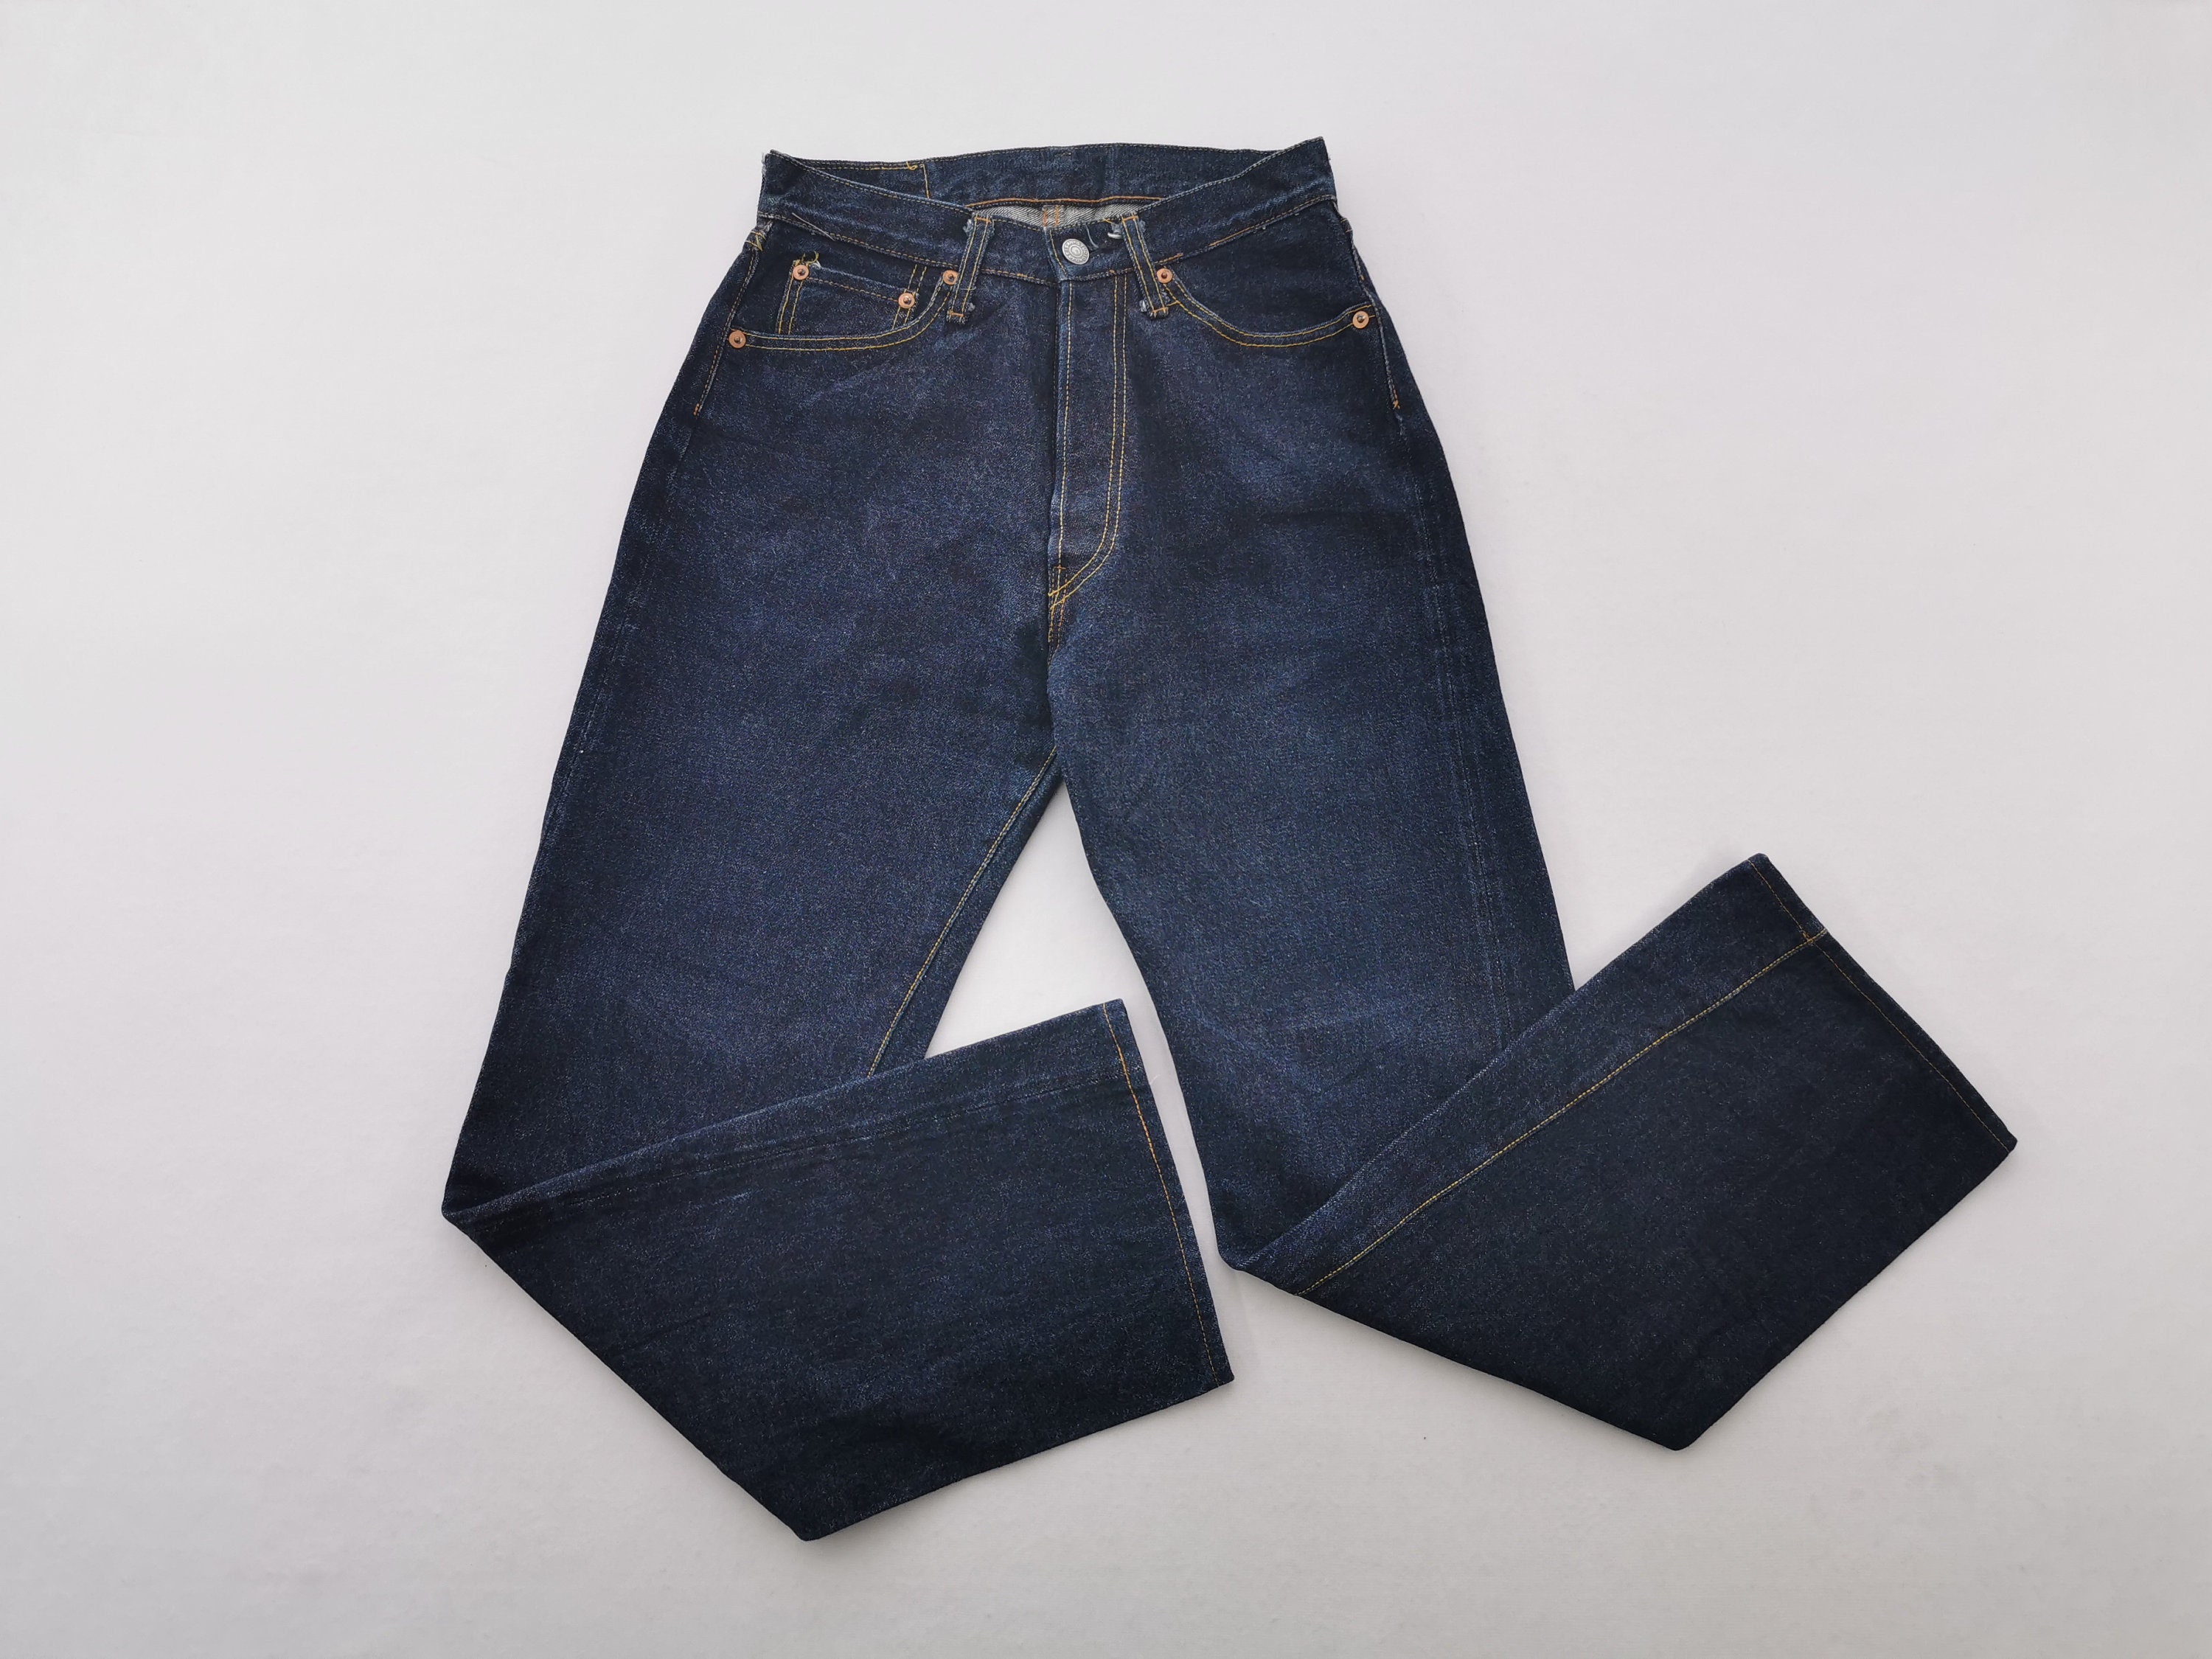 Studio D'Artisan Jeans Studio D'Artisan Selvedge Denim Jeans Size 27/28x28